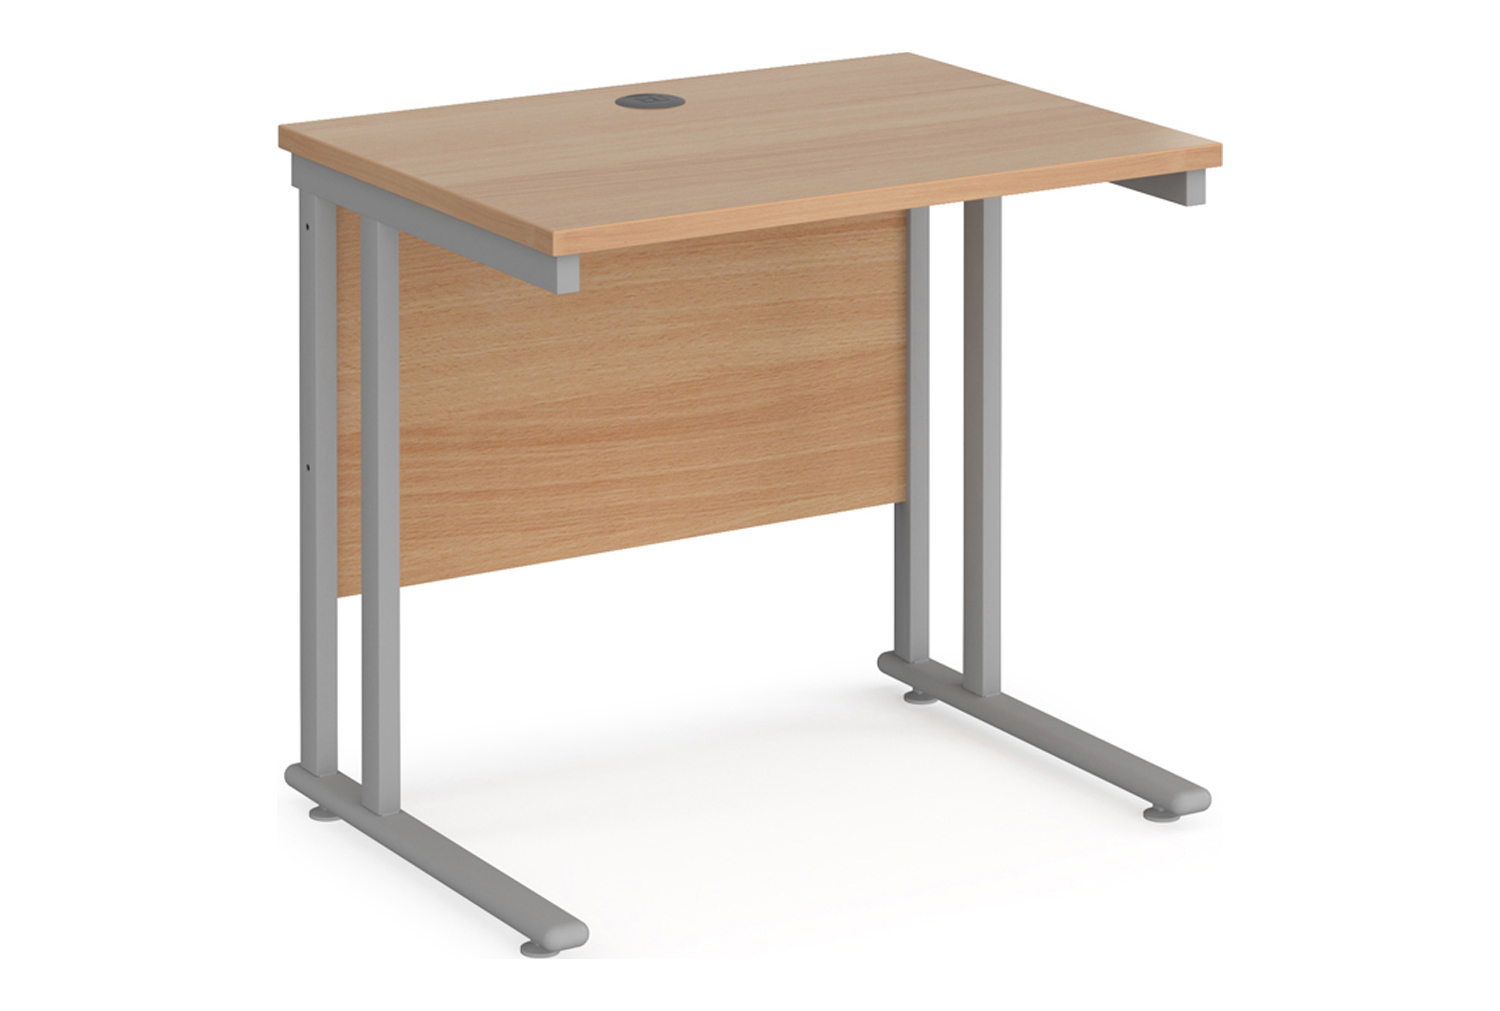 Value Line Deluxe C-Leg Narrow Rectangular Office Desk (Silver Legs), 80w60dx73h (cm), Beech